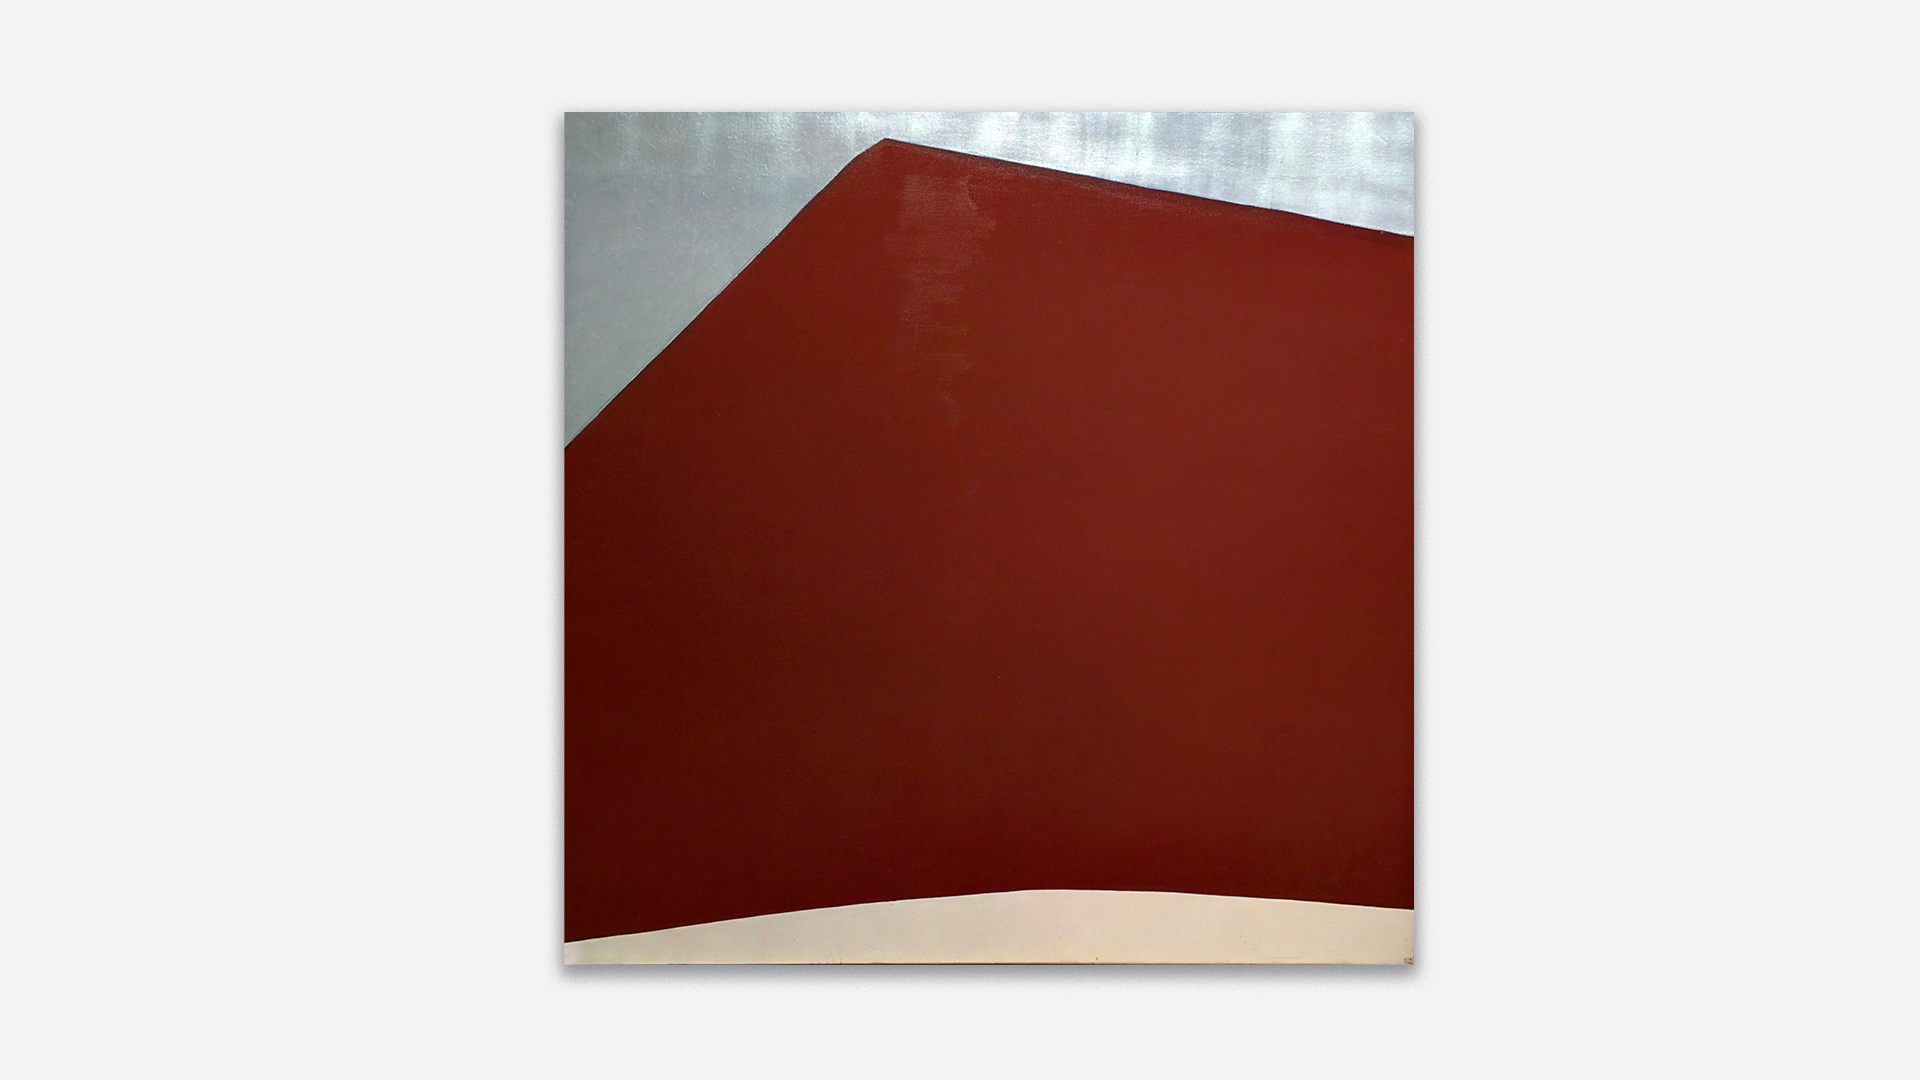 Anna-Eva Bergman, N°18-1976 Montagne rouge, 1976, Acrylic and metal leaf on canvas, 180 x 180 cm